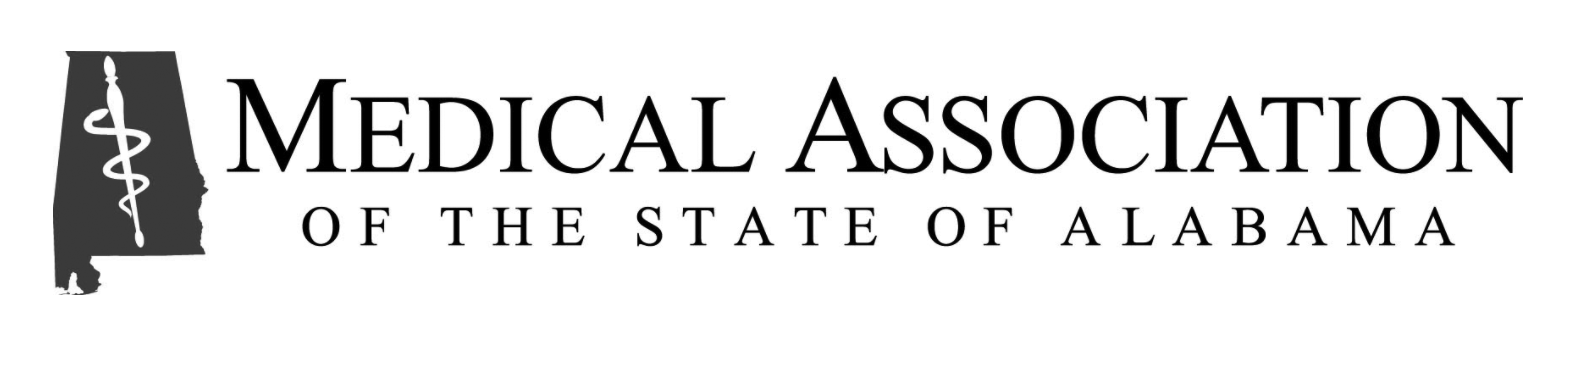 Medical Association of the State of Alabama